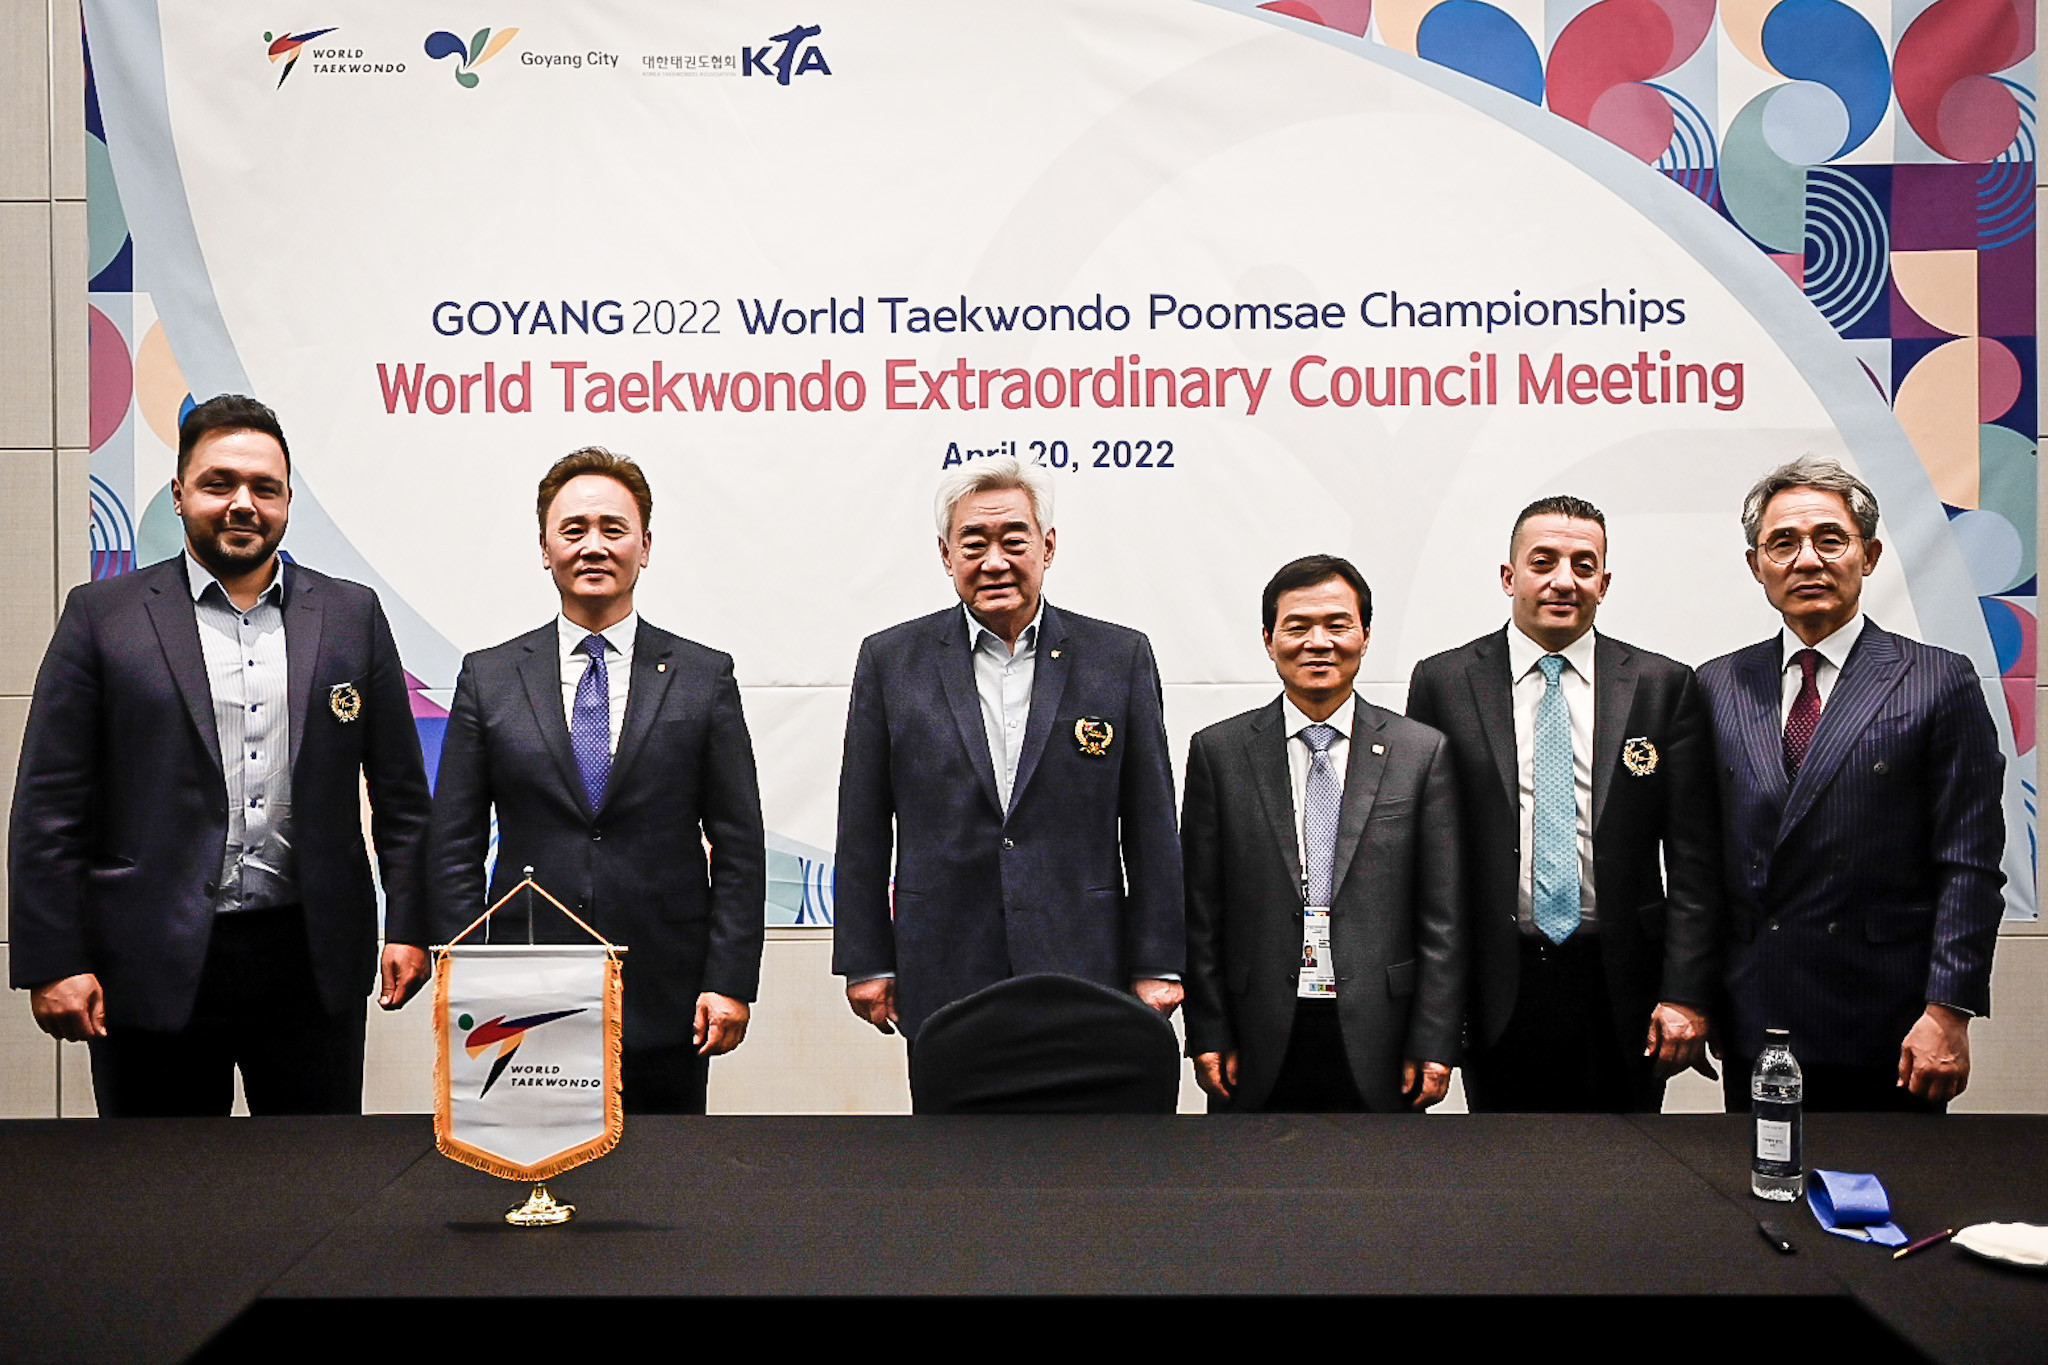 The World Taekwondo Council meeting was held prior to the Poomase World Championships in Goyang ©World Taekwondo